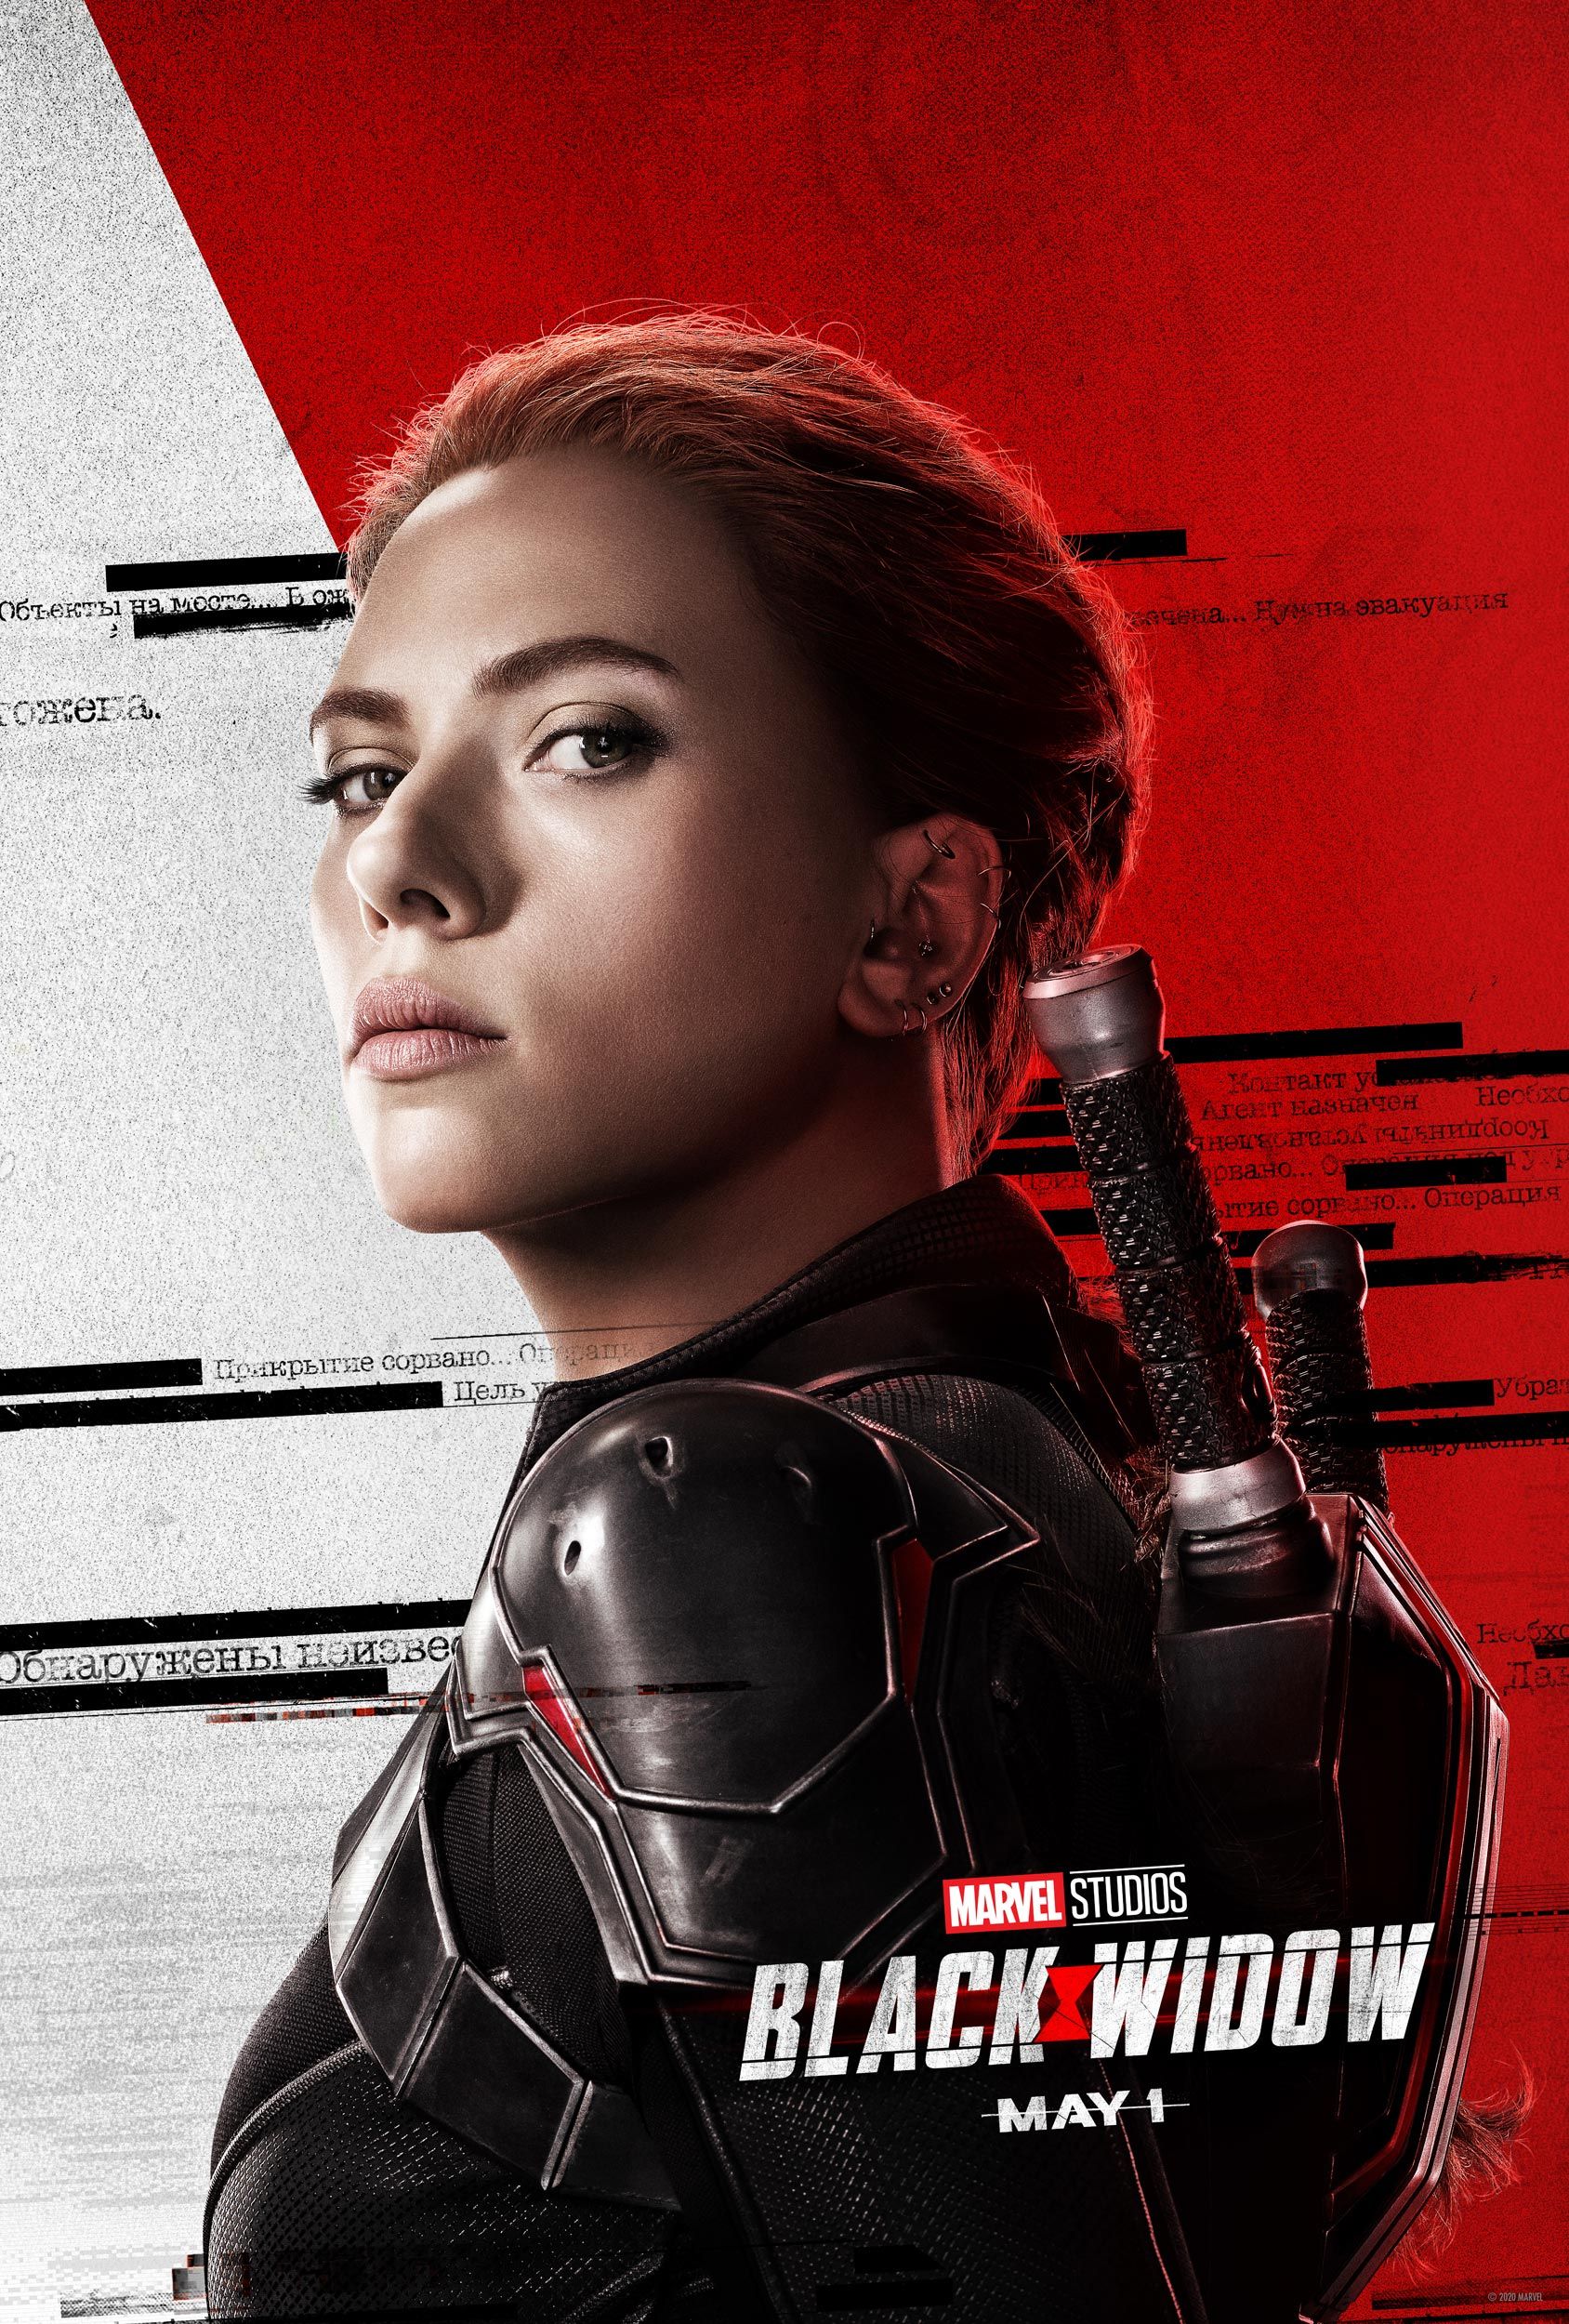 Black Widow is going way back into Natasha Romanoff's past